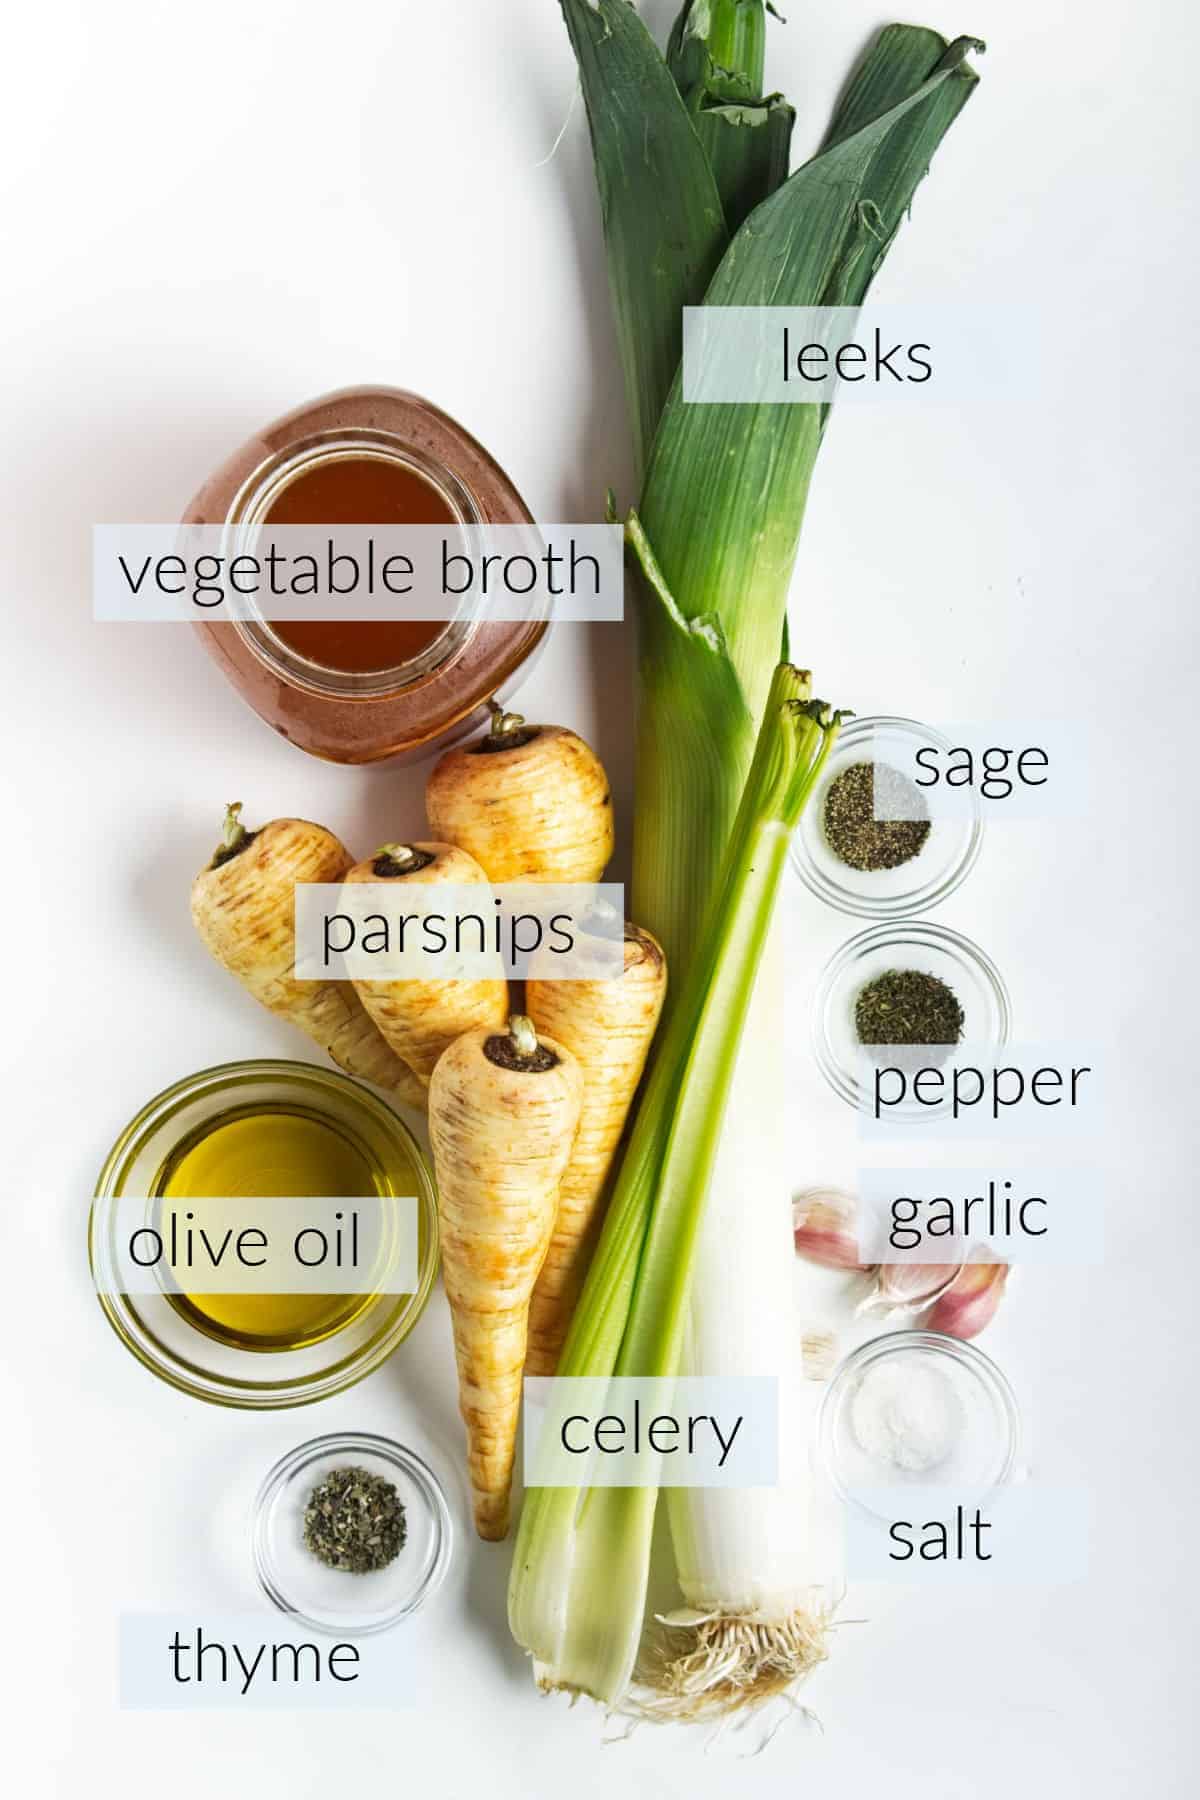 Fresh Parsnips, leeks, celery olive oil, vegetable broth and seasonings measured out of white board.